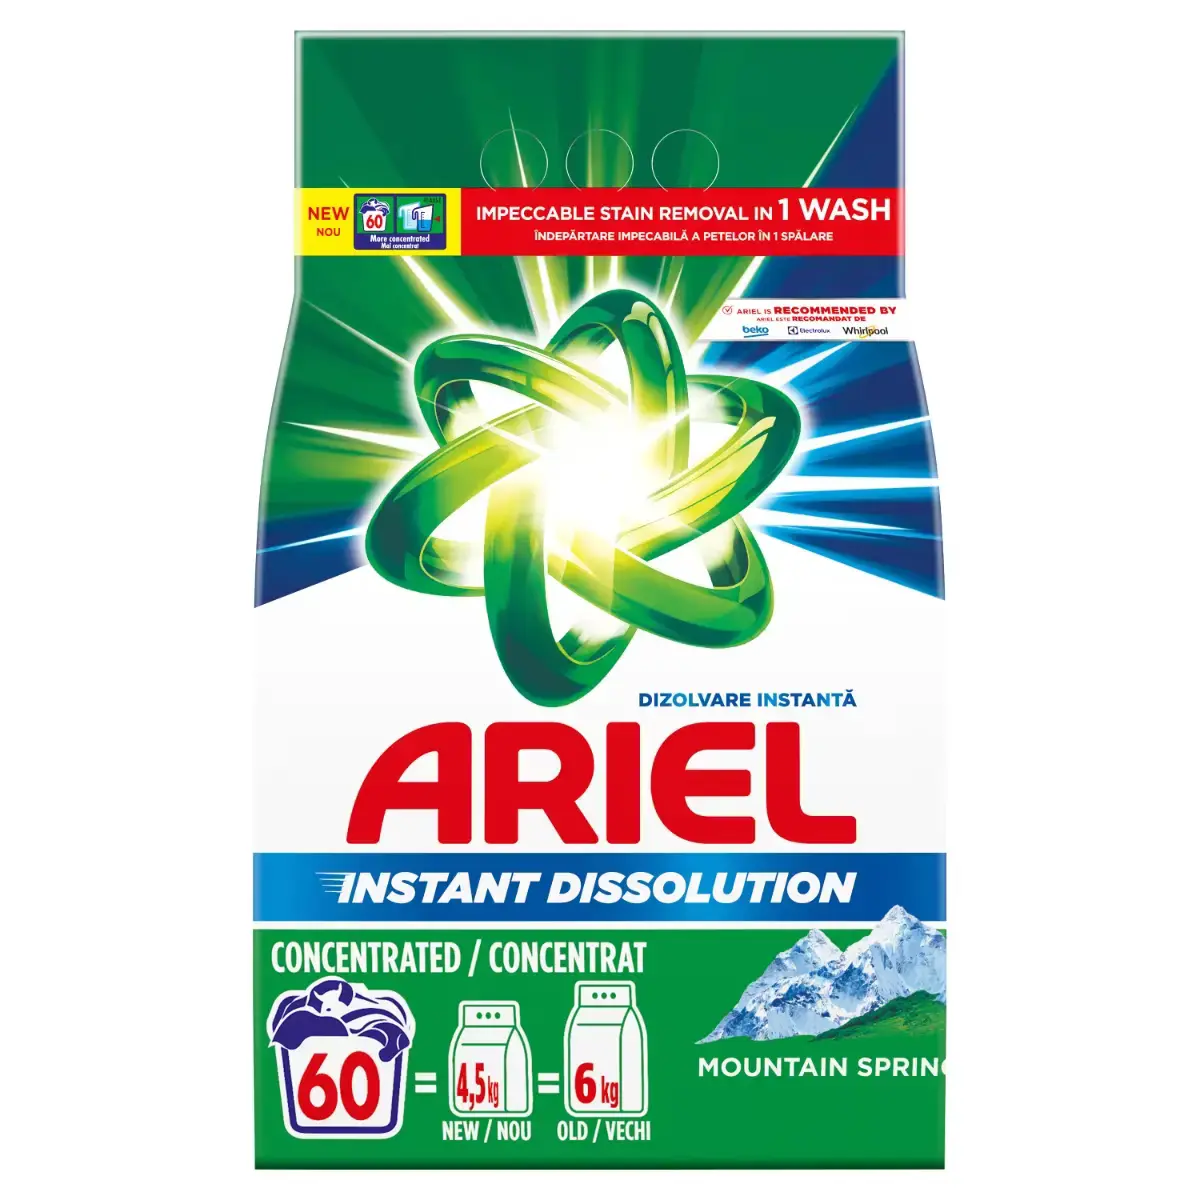 Detergent pudra - ARIEL DETERGENT MOUNTAIN SPRING 4.5KG 4/BAX, lucidiusmarket.ro